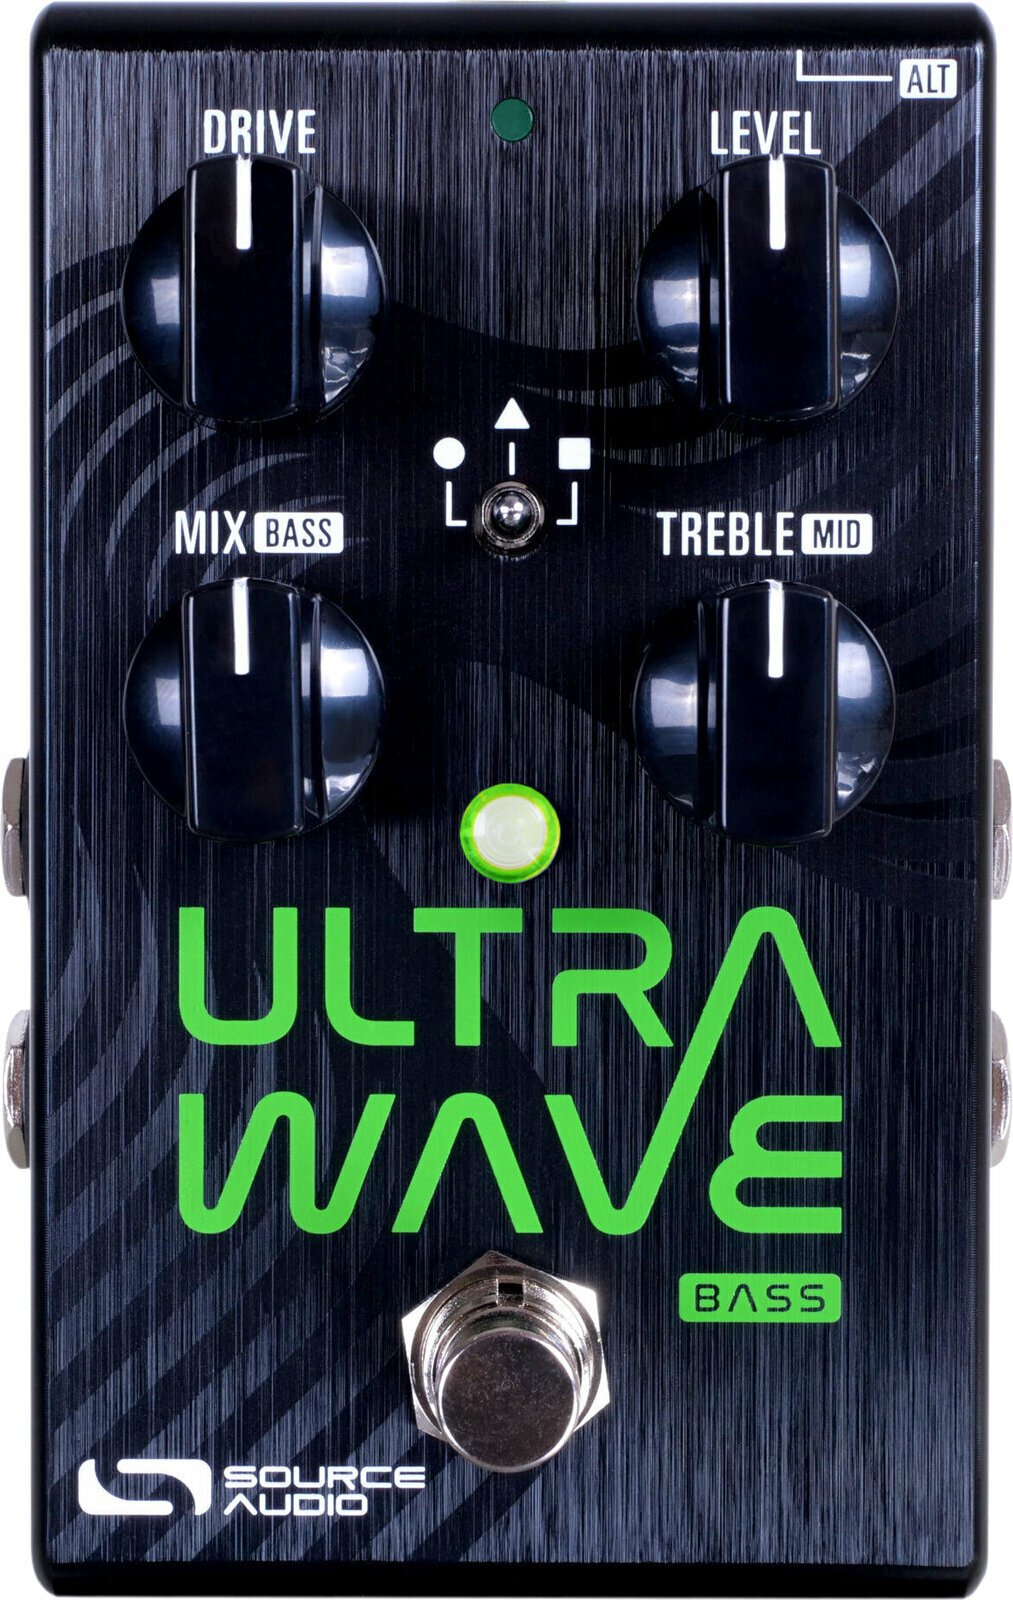 Gitarreneffekt Source Audio SA 251 One Series Ultrawave Multiband Bass